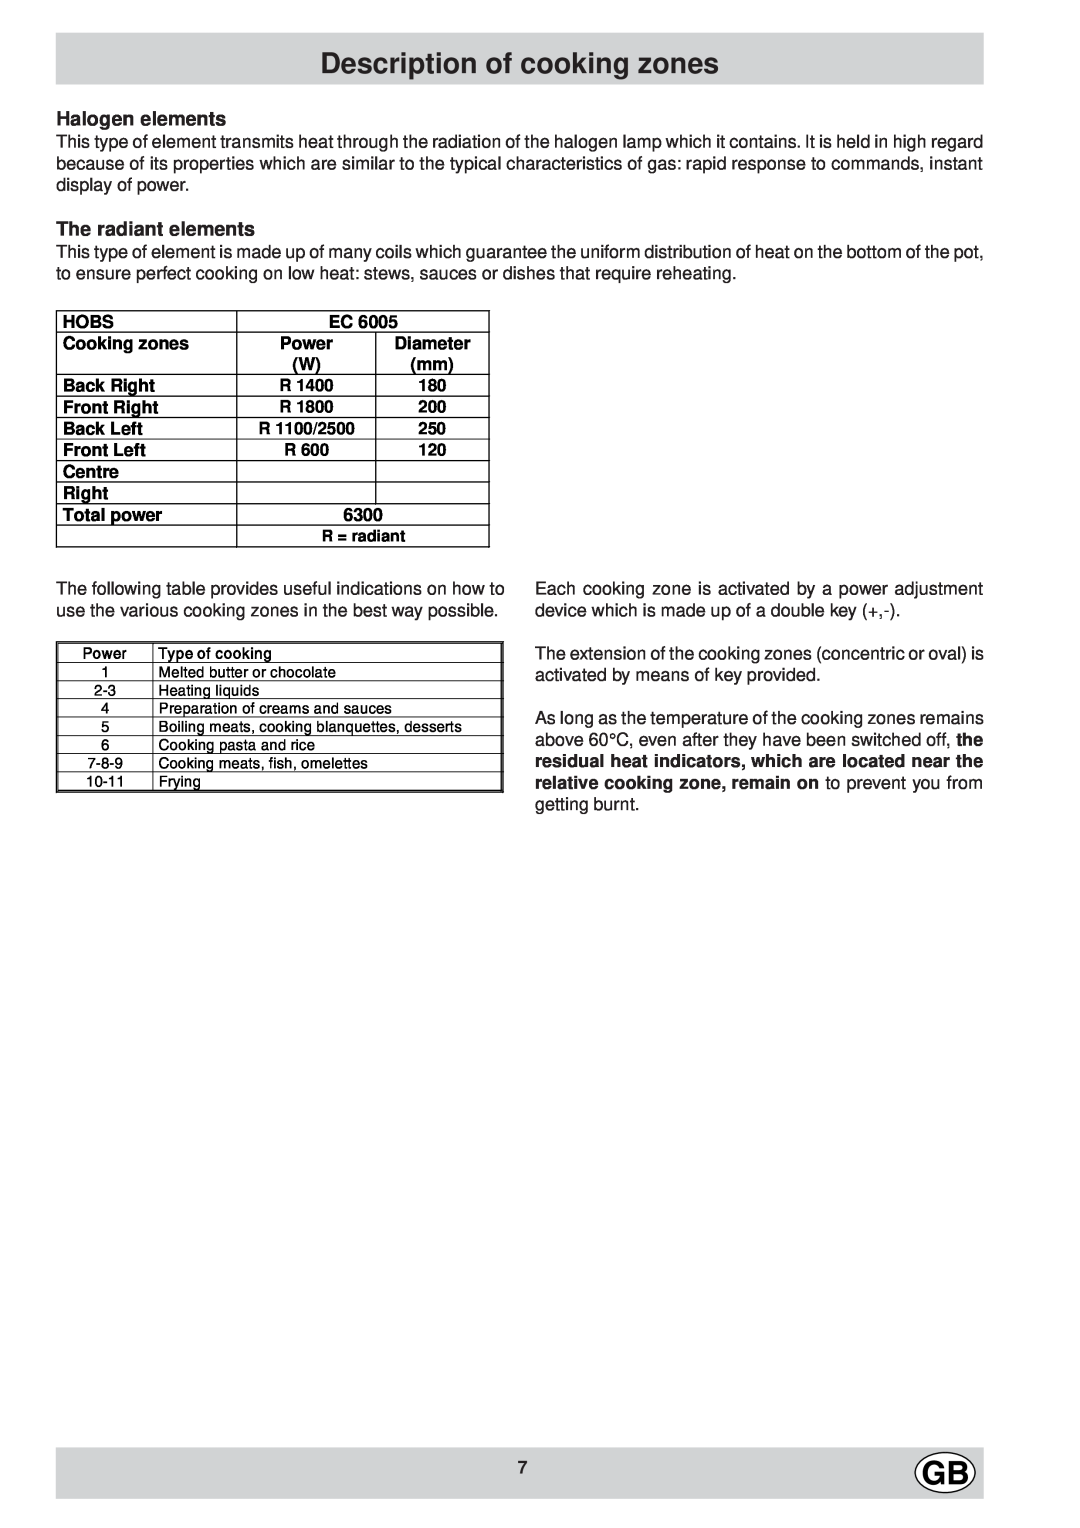 Hotpoint EC6005 manual Description of cooking zones, Halogen elements, The radiant elements 